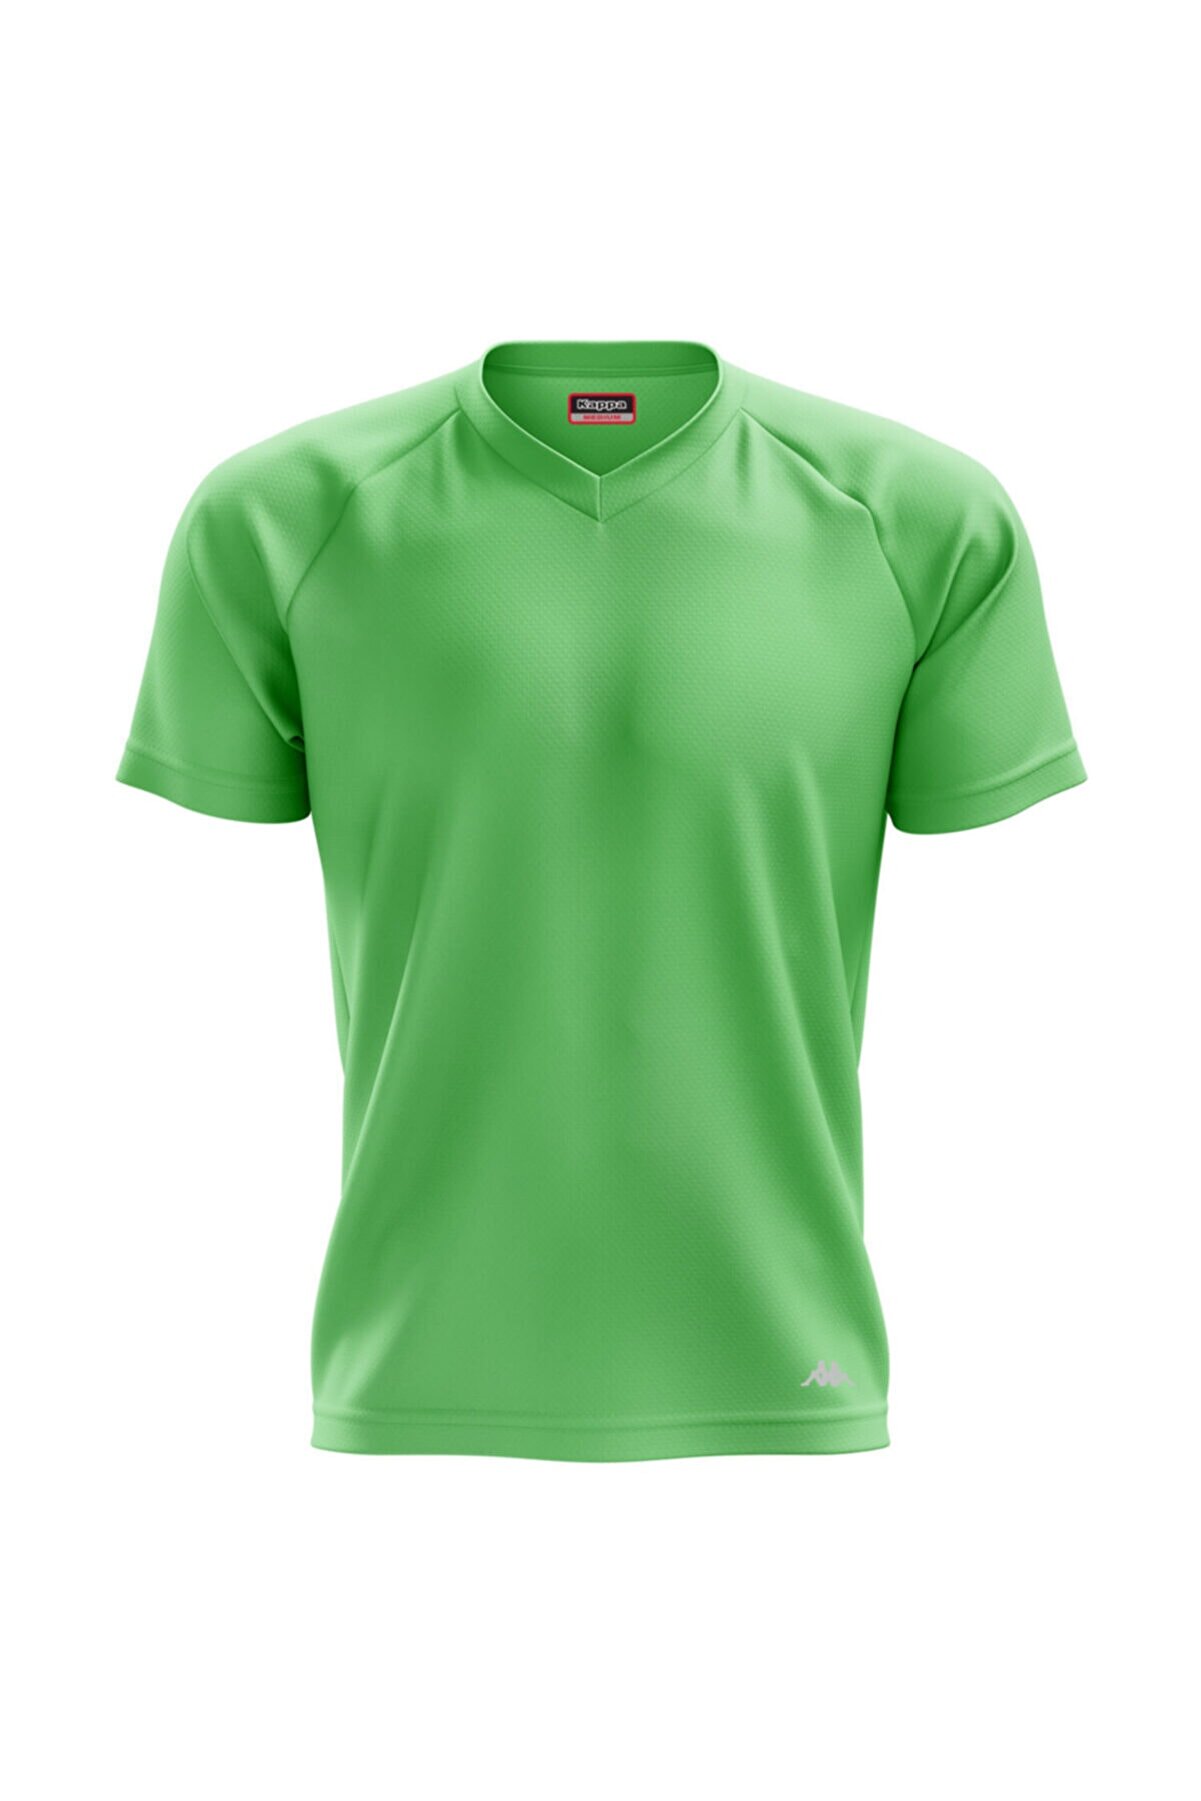 Kappa Ribana V Yakalı T-shirt Mombo Yeşil